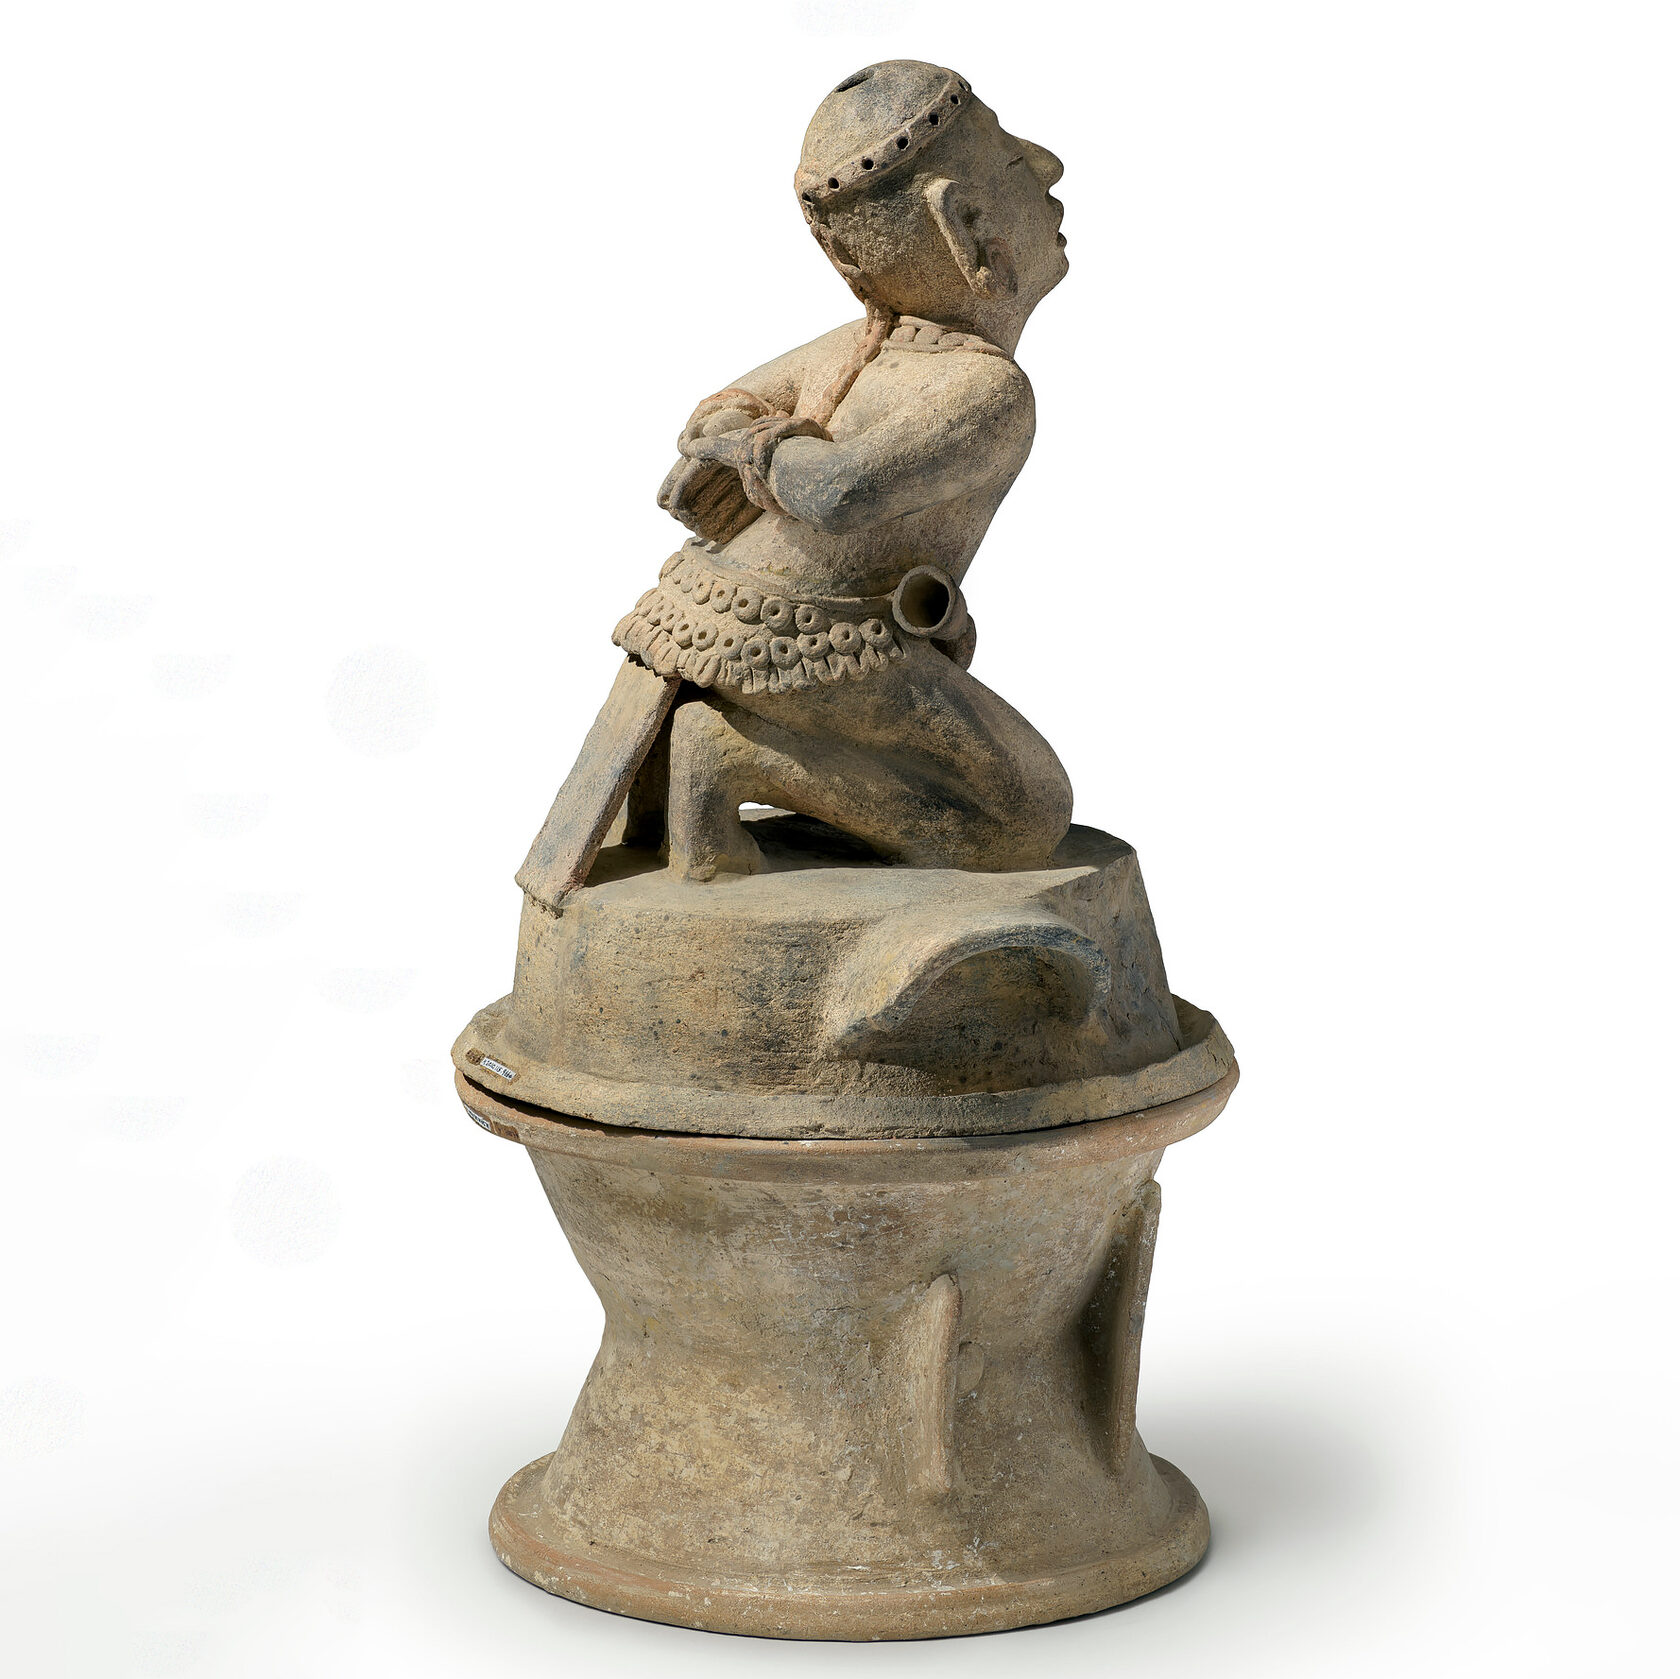 Курильница. Майя, 300-900 гг. н.э. Коллекция Los Angeles County Museum of Art.